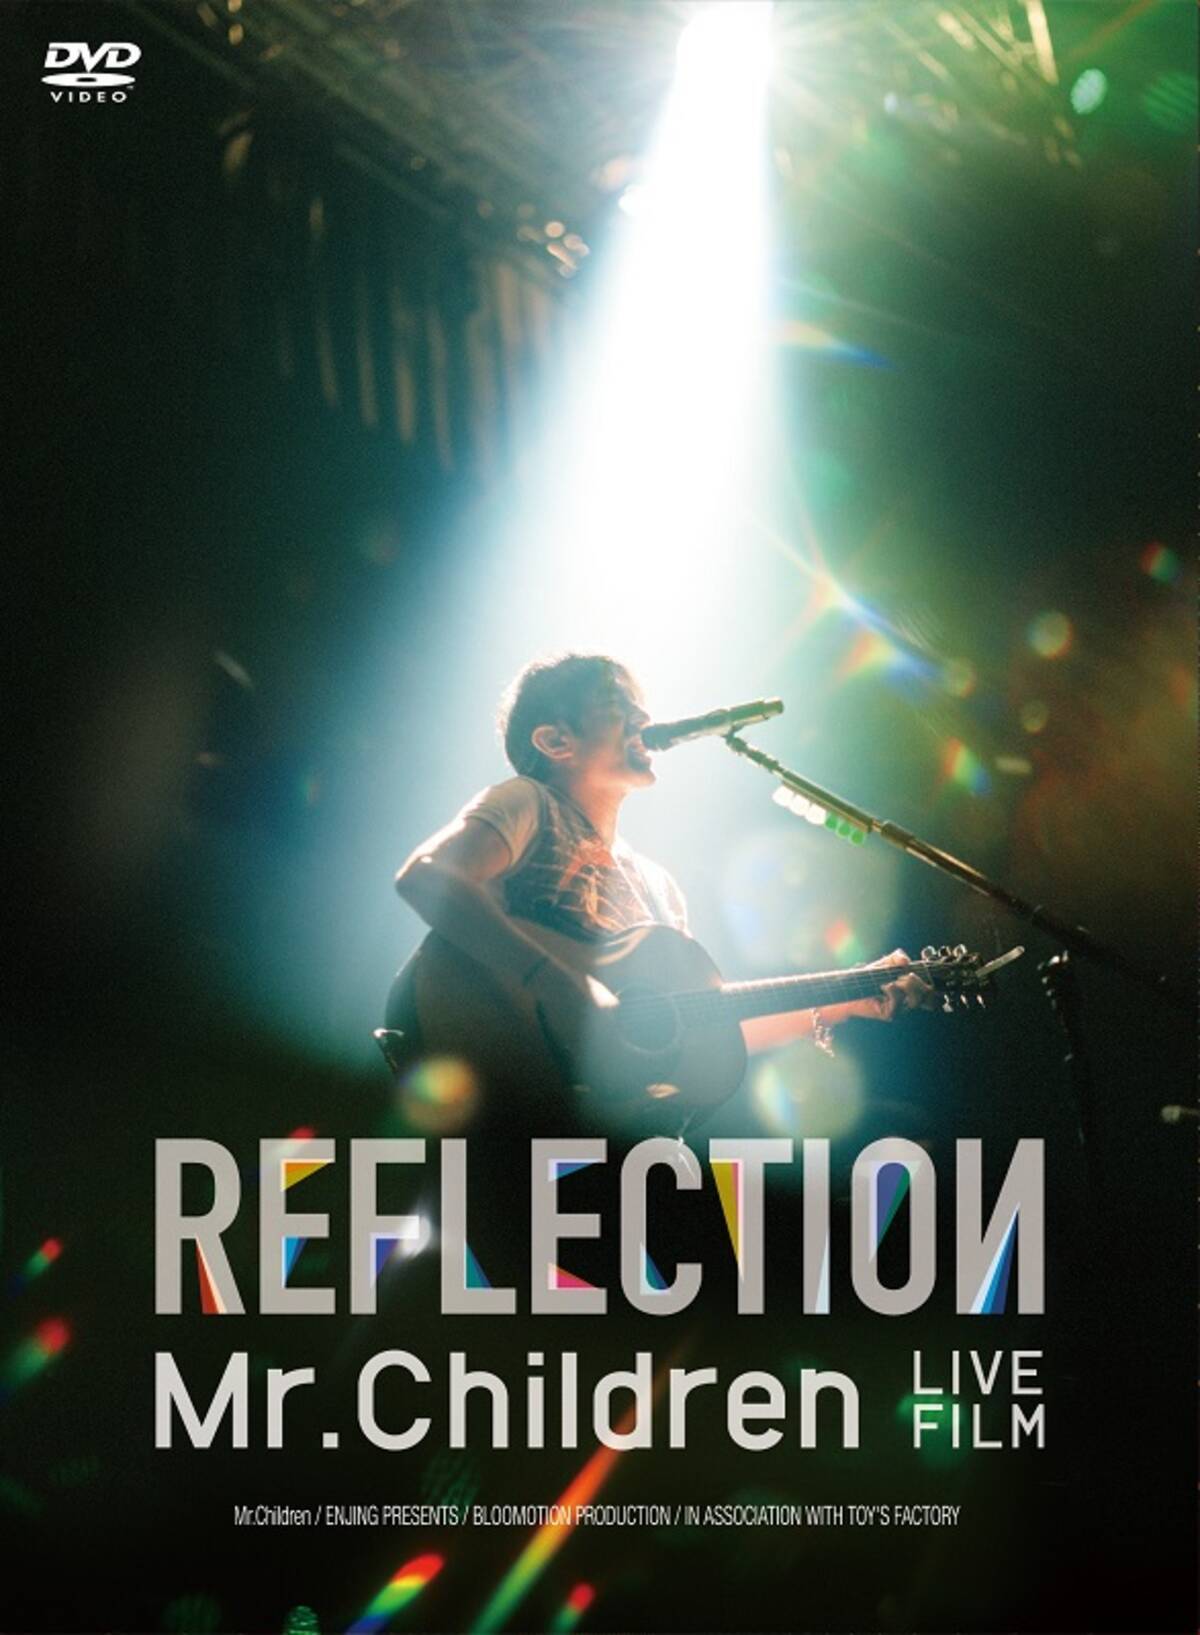 Mr Children ライブ映像作品 Reflection Live Film をリリース エキサイトニュース